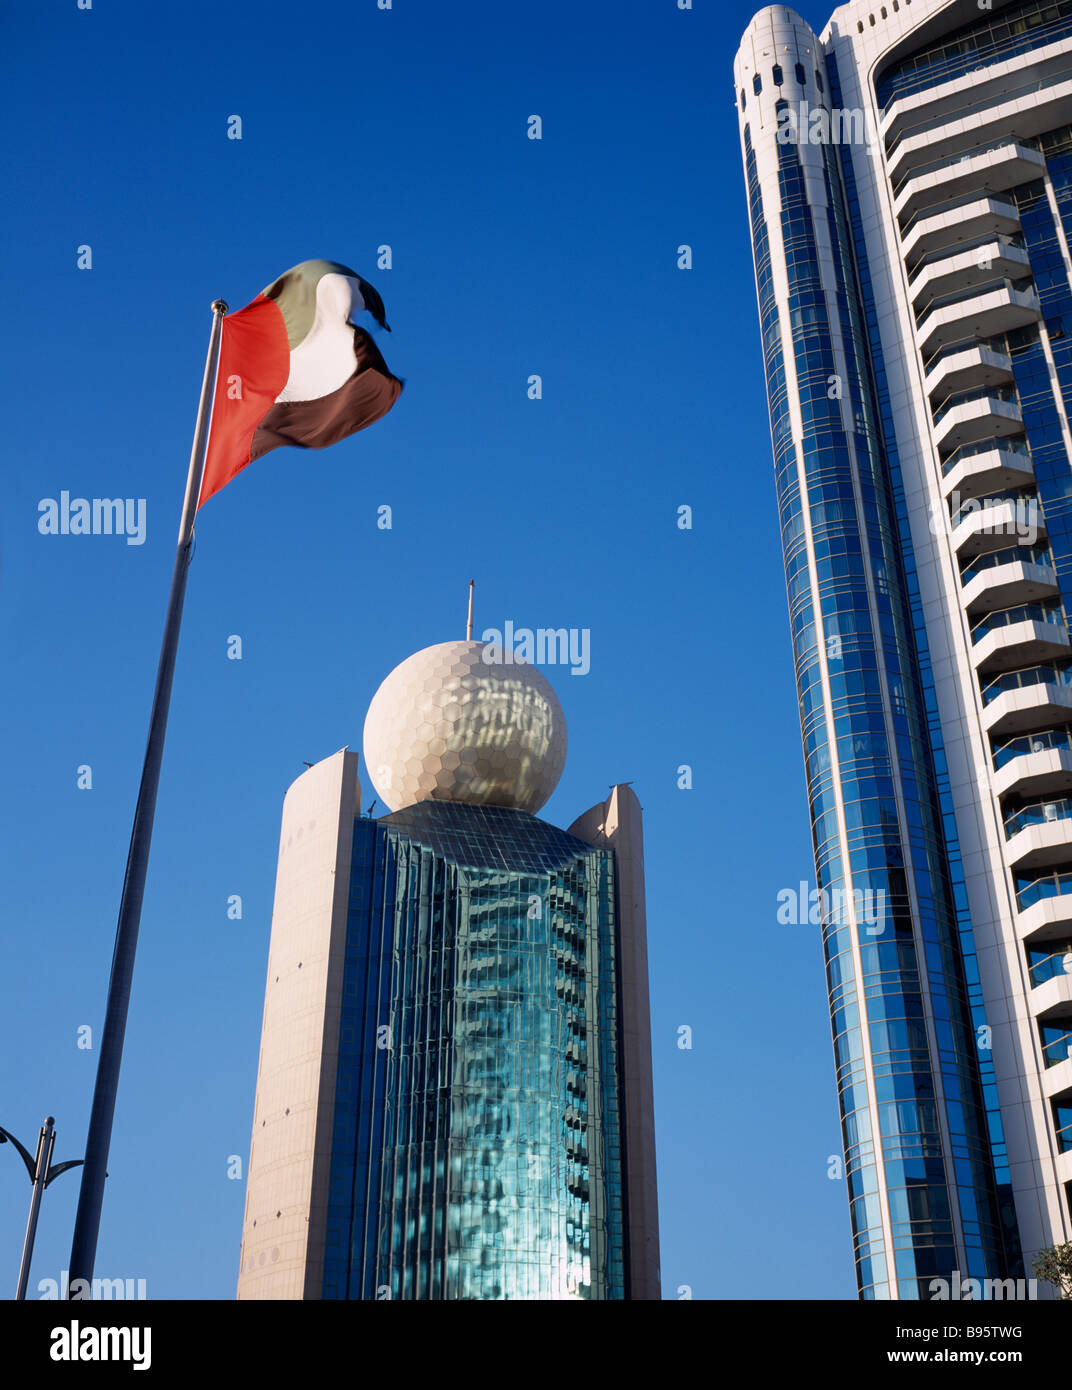 UAE Dubai Deira Etisalat Building on Dubai Creek with flag pole in foreground. Stock Photo